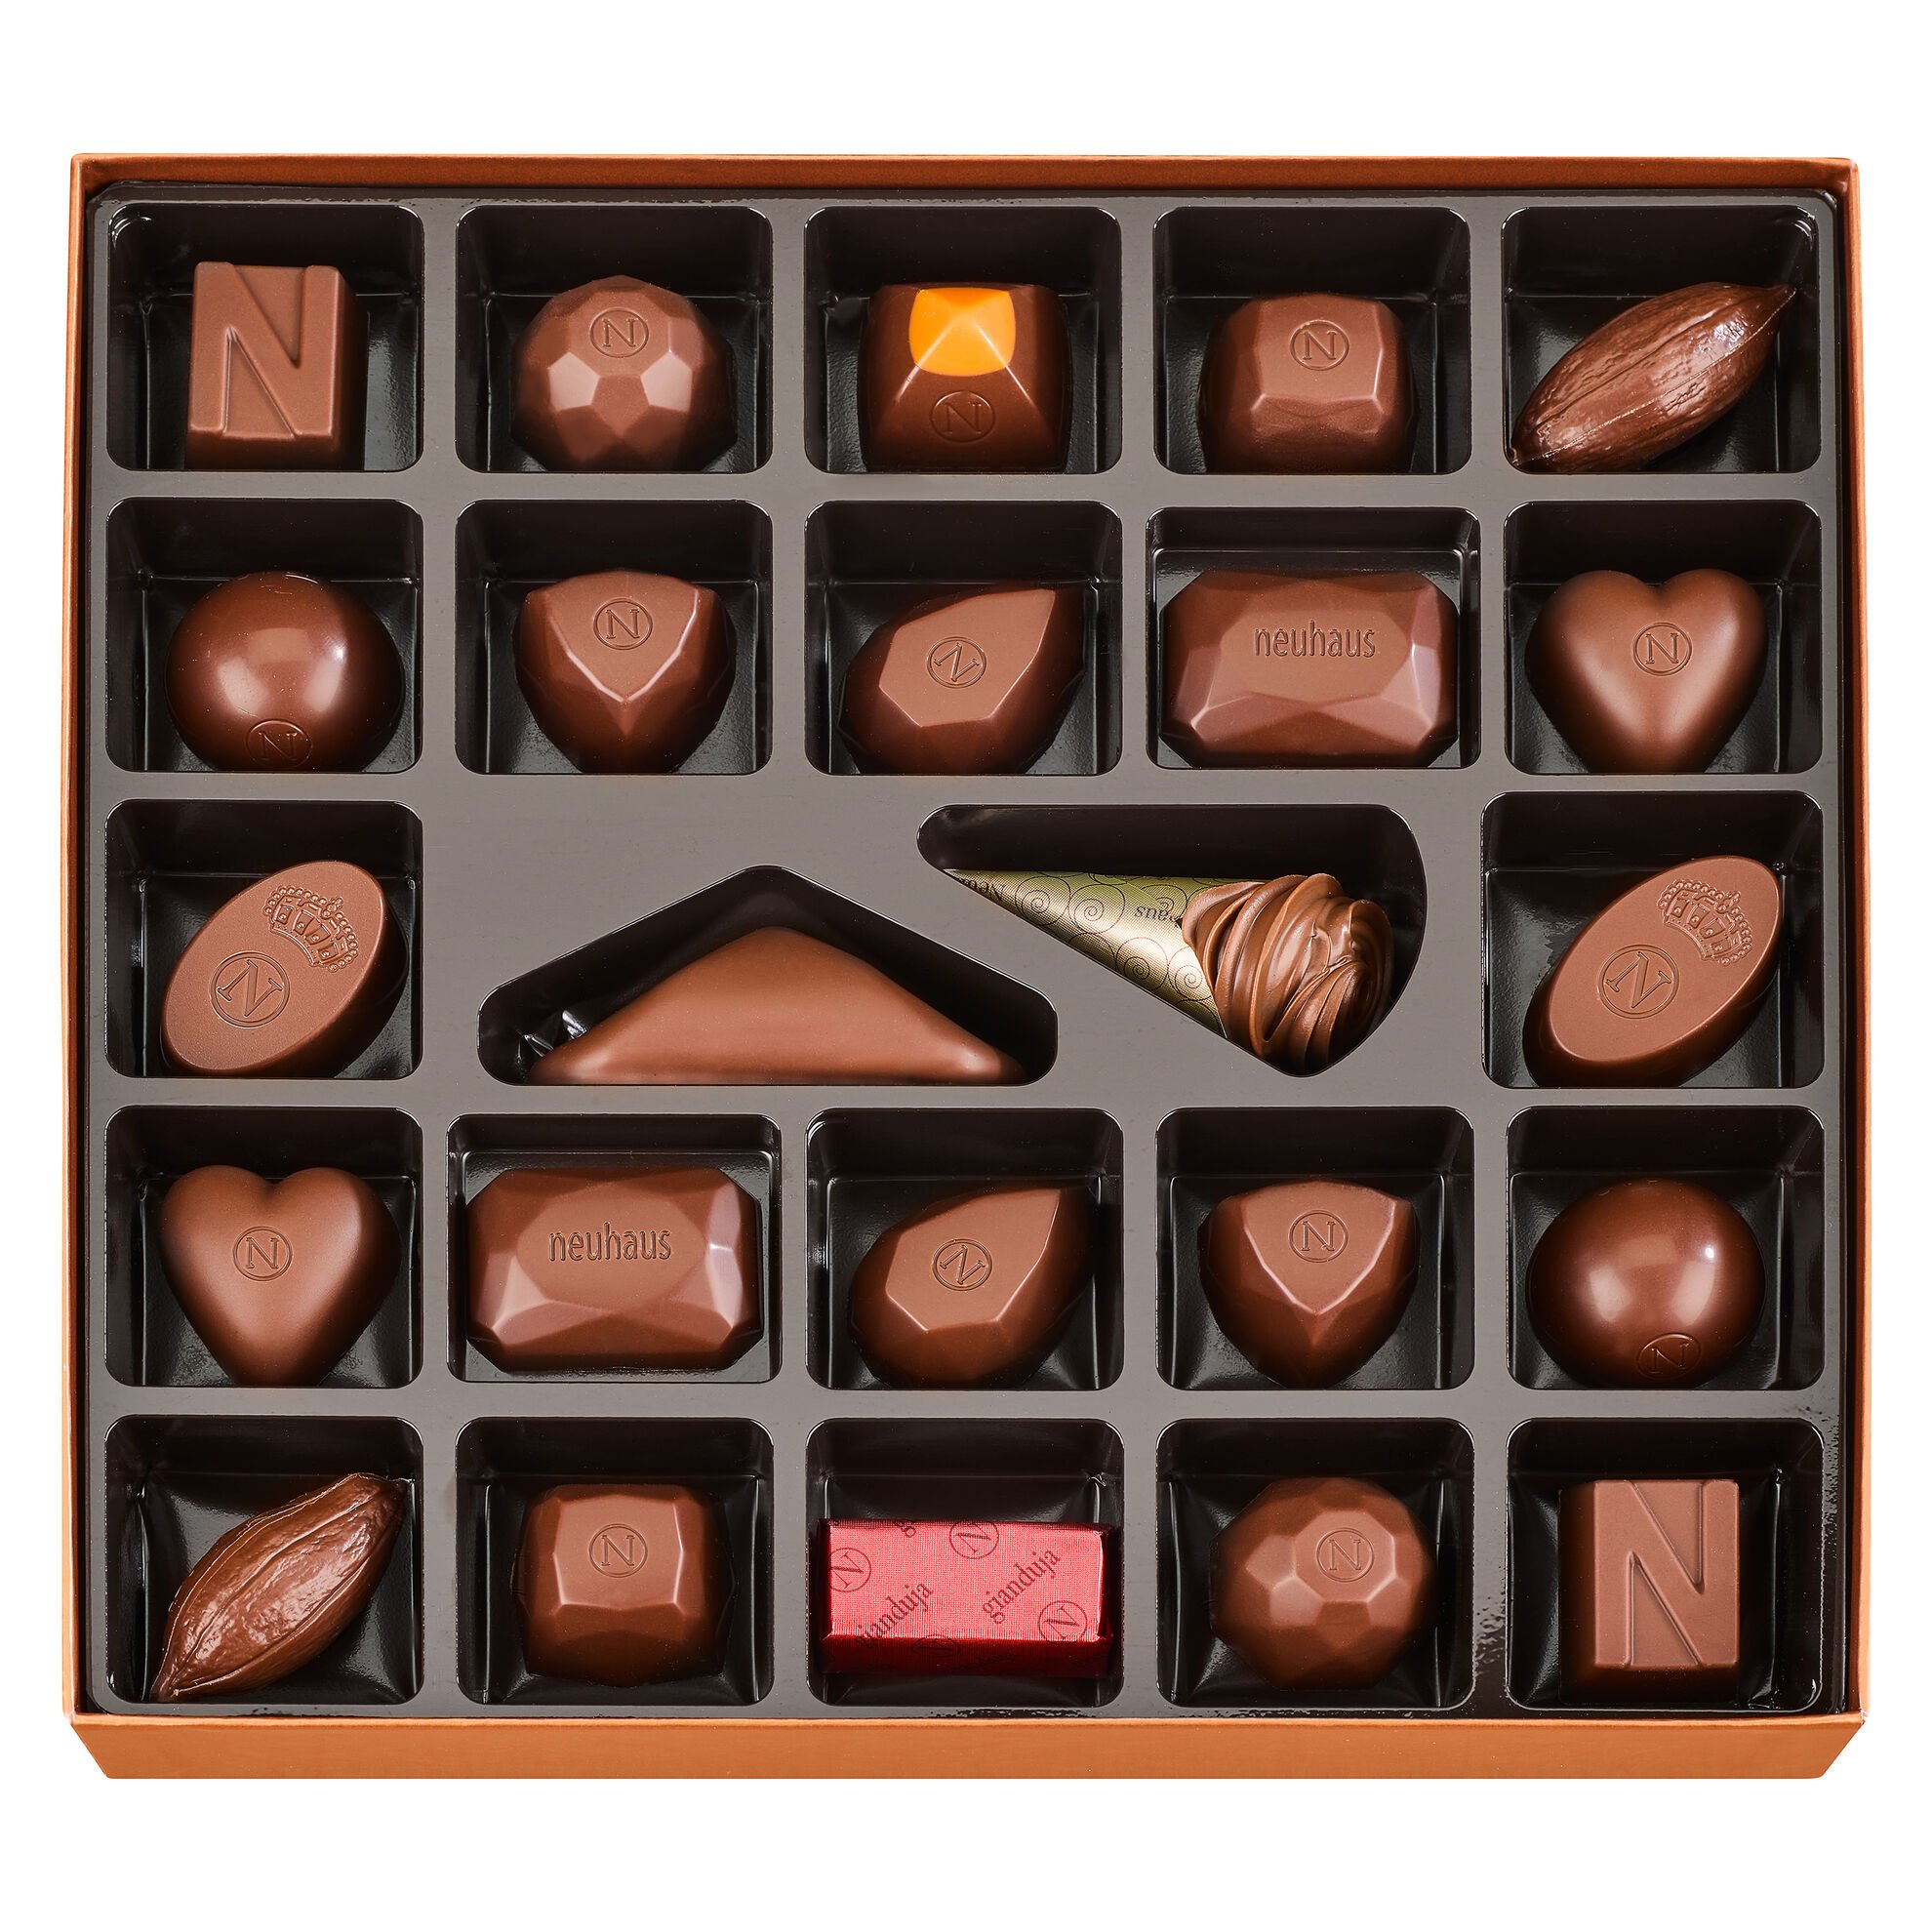 Neuhaus Collection Chocolats Au Lait image number 21